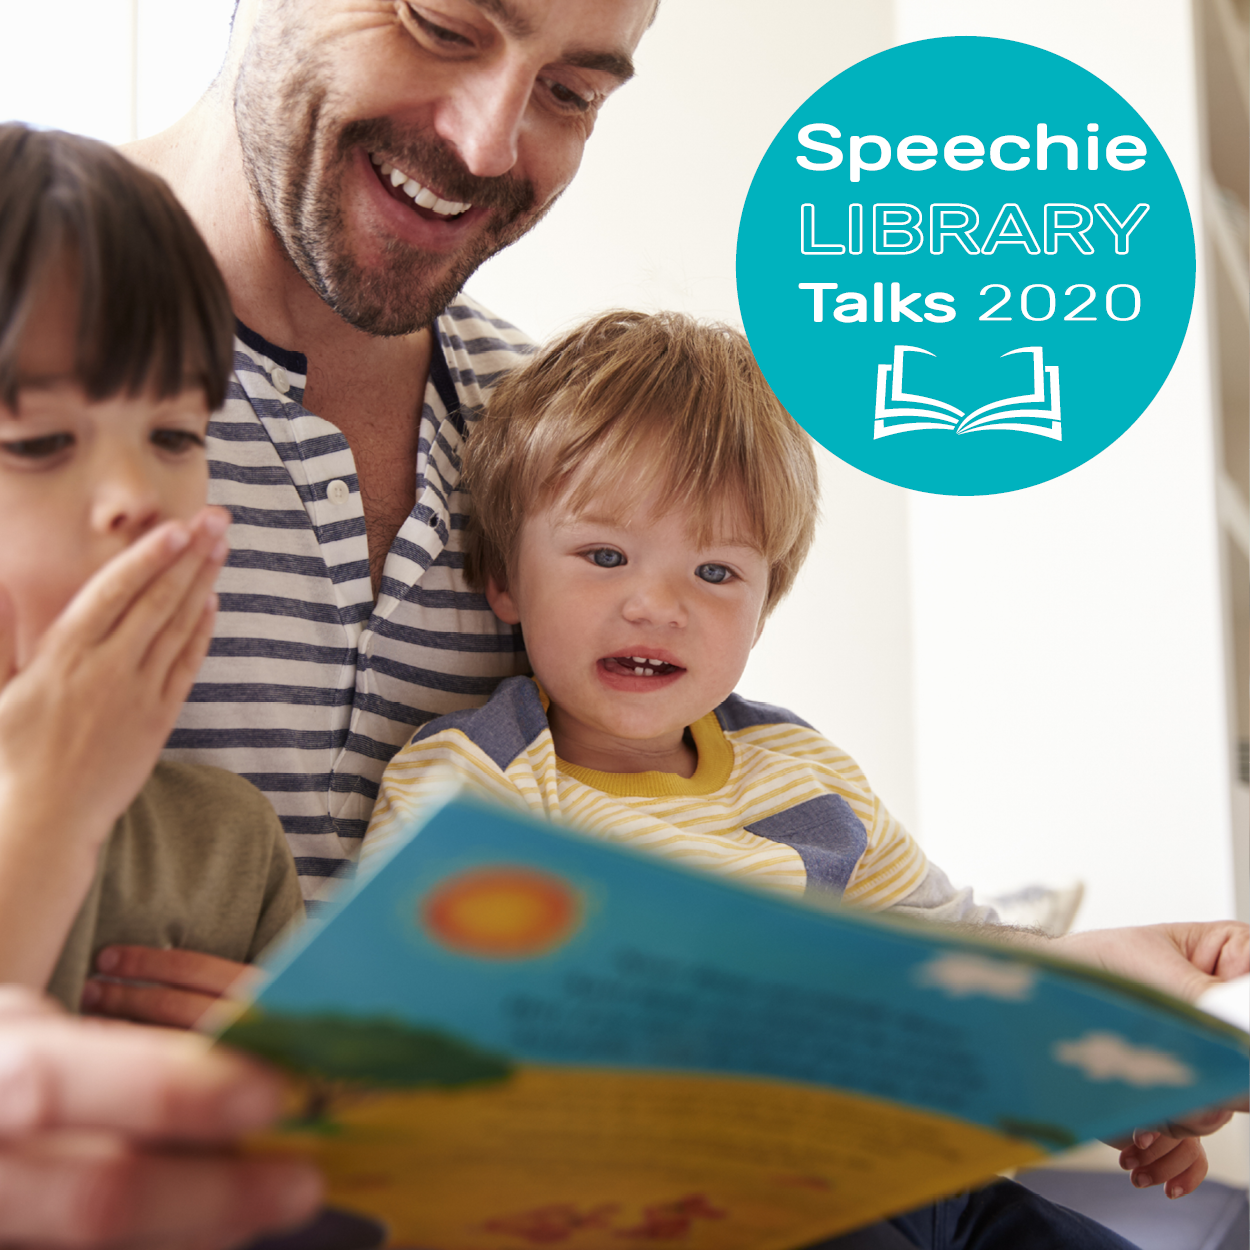 Speechie Library Talk